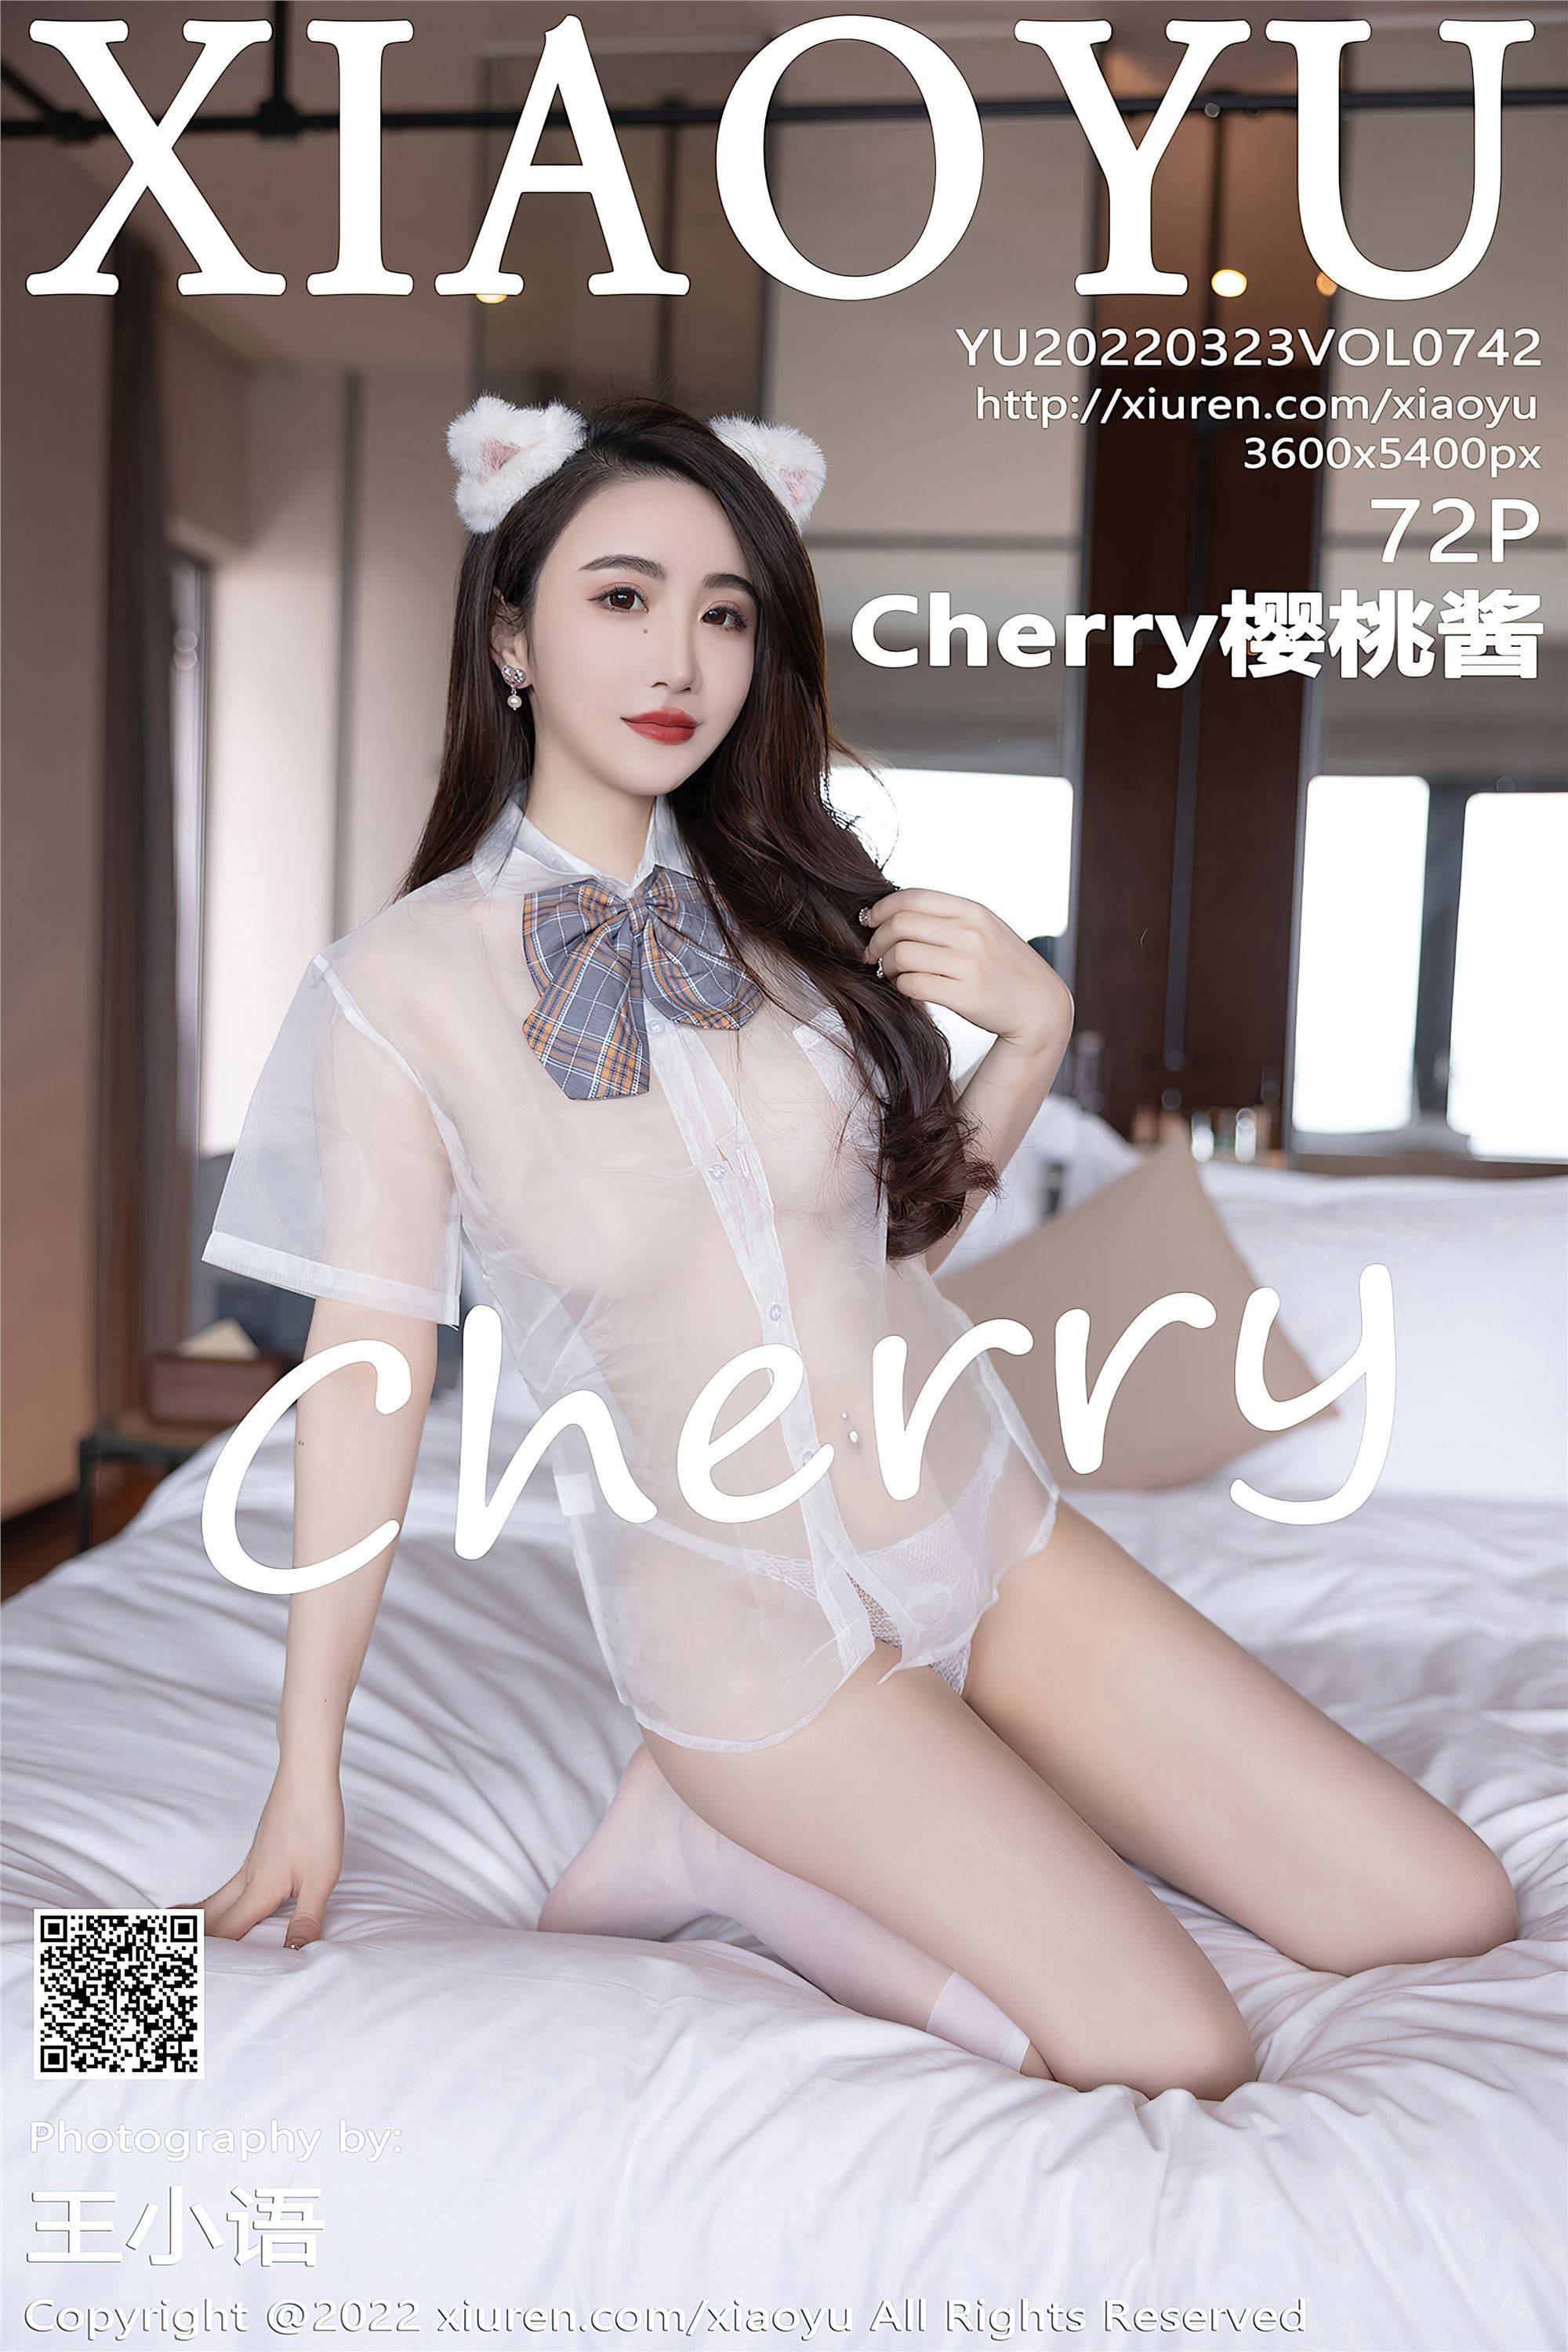 【XIAOYU畫語系列】2022.03.23 Vol.742 Cherry櫻桃醬 完整版無水印寫真【73P】 - 貼圖 - 絲襪美腿 -